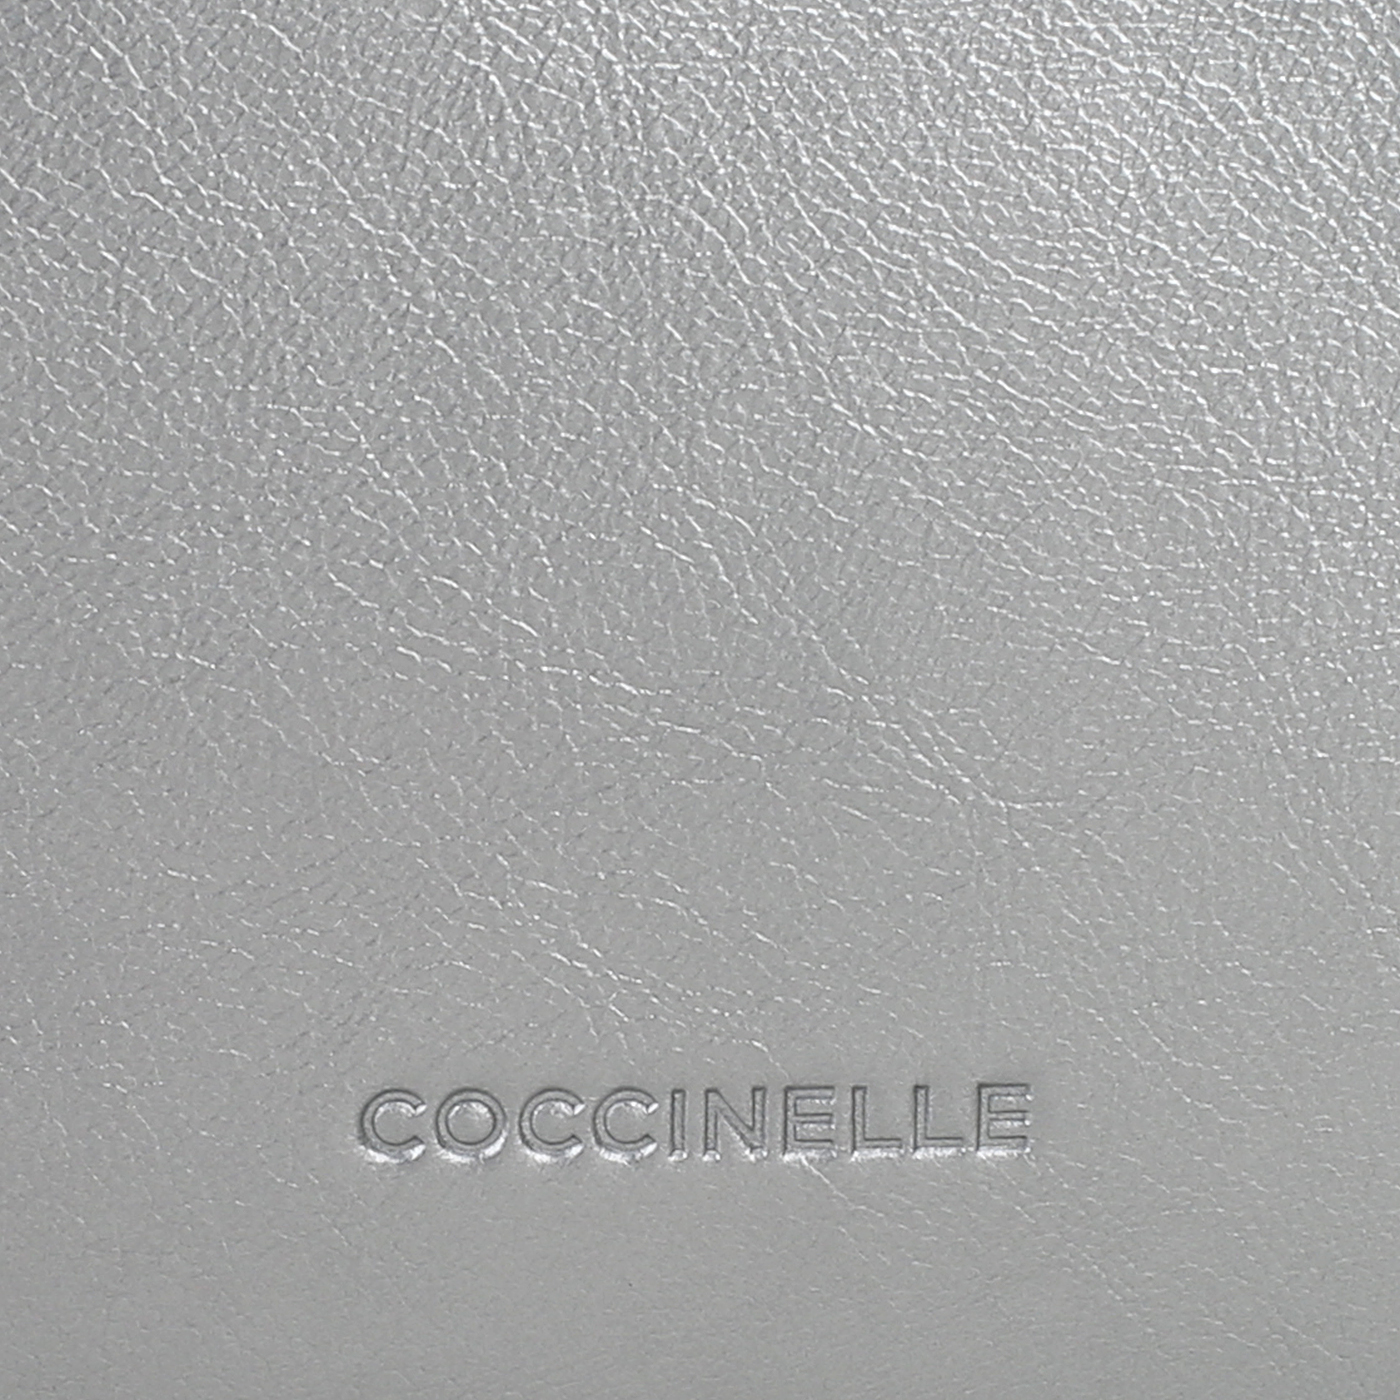 Кожаная сумка Coccinelle Carrie Rock